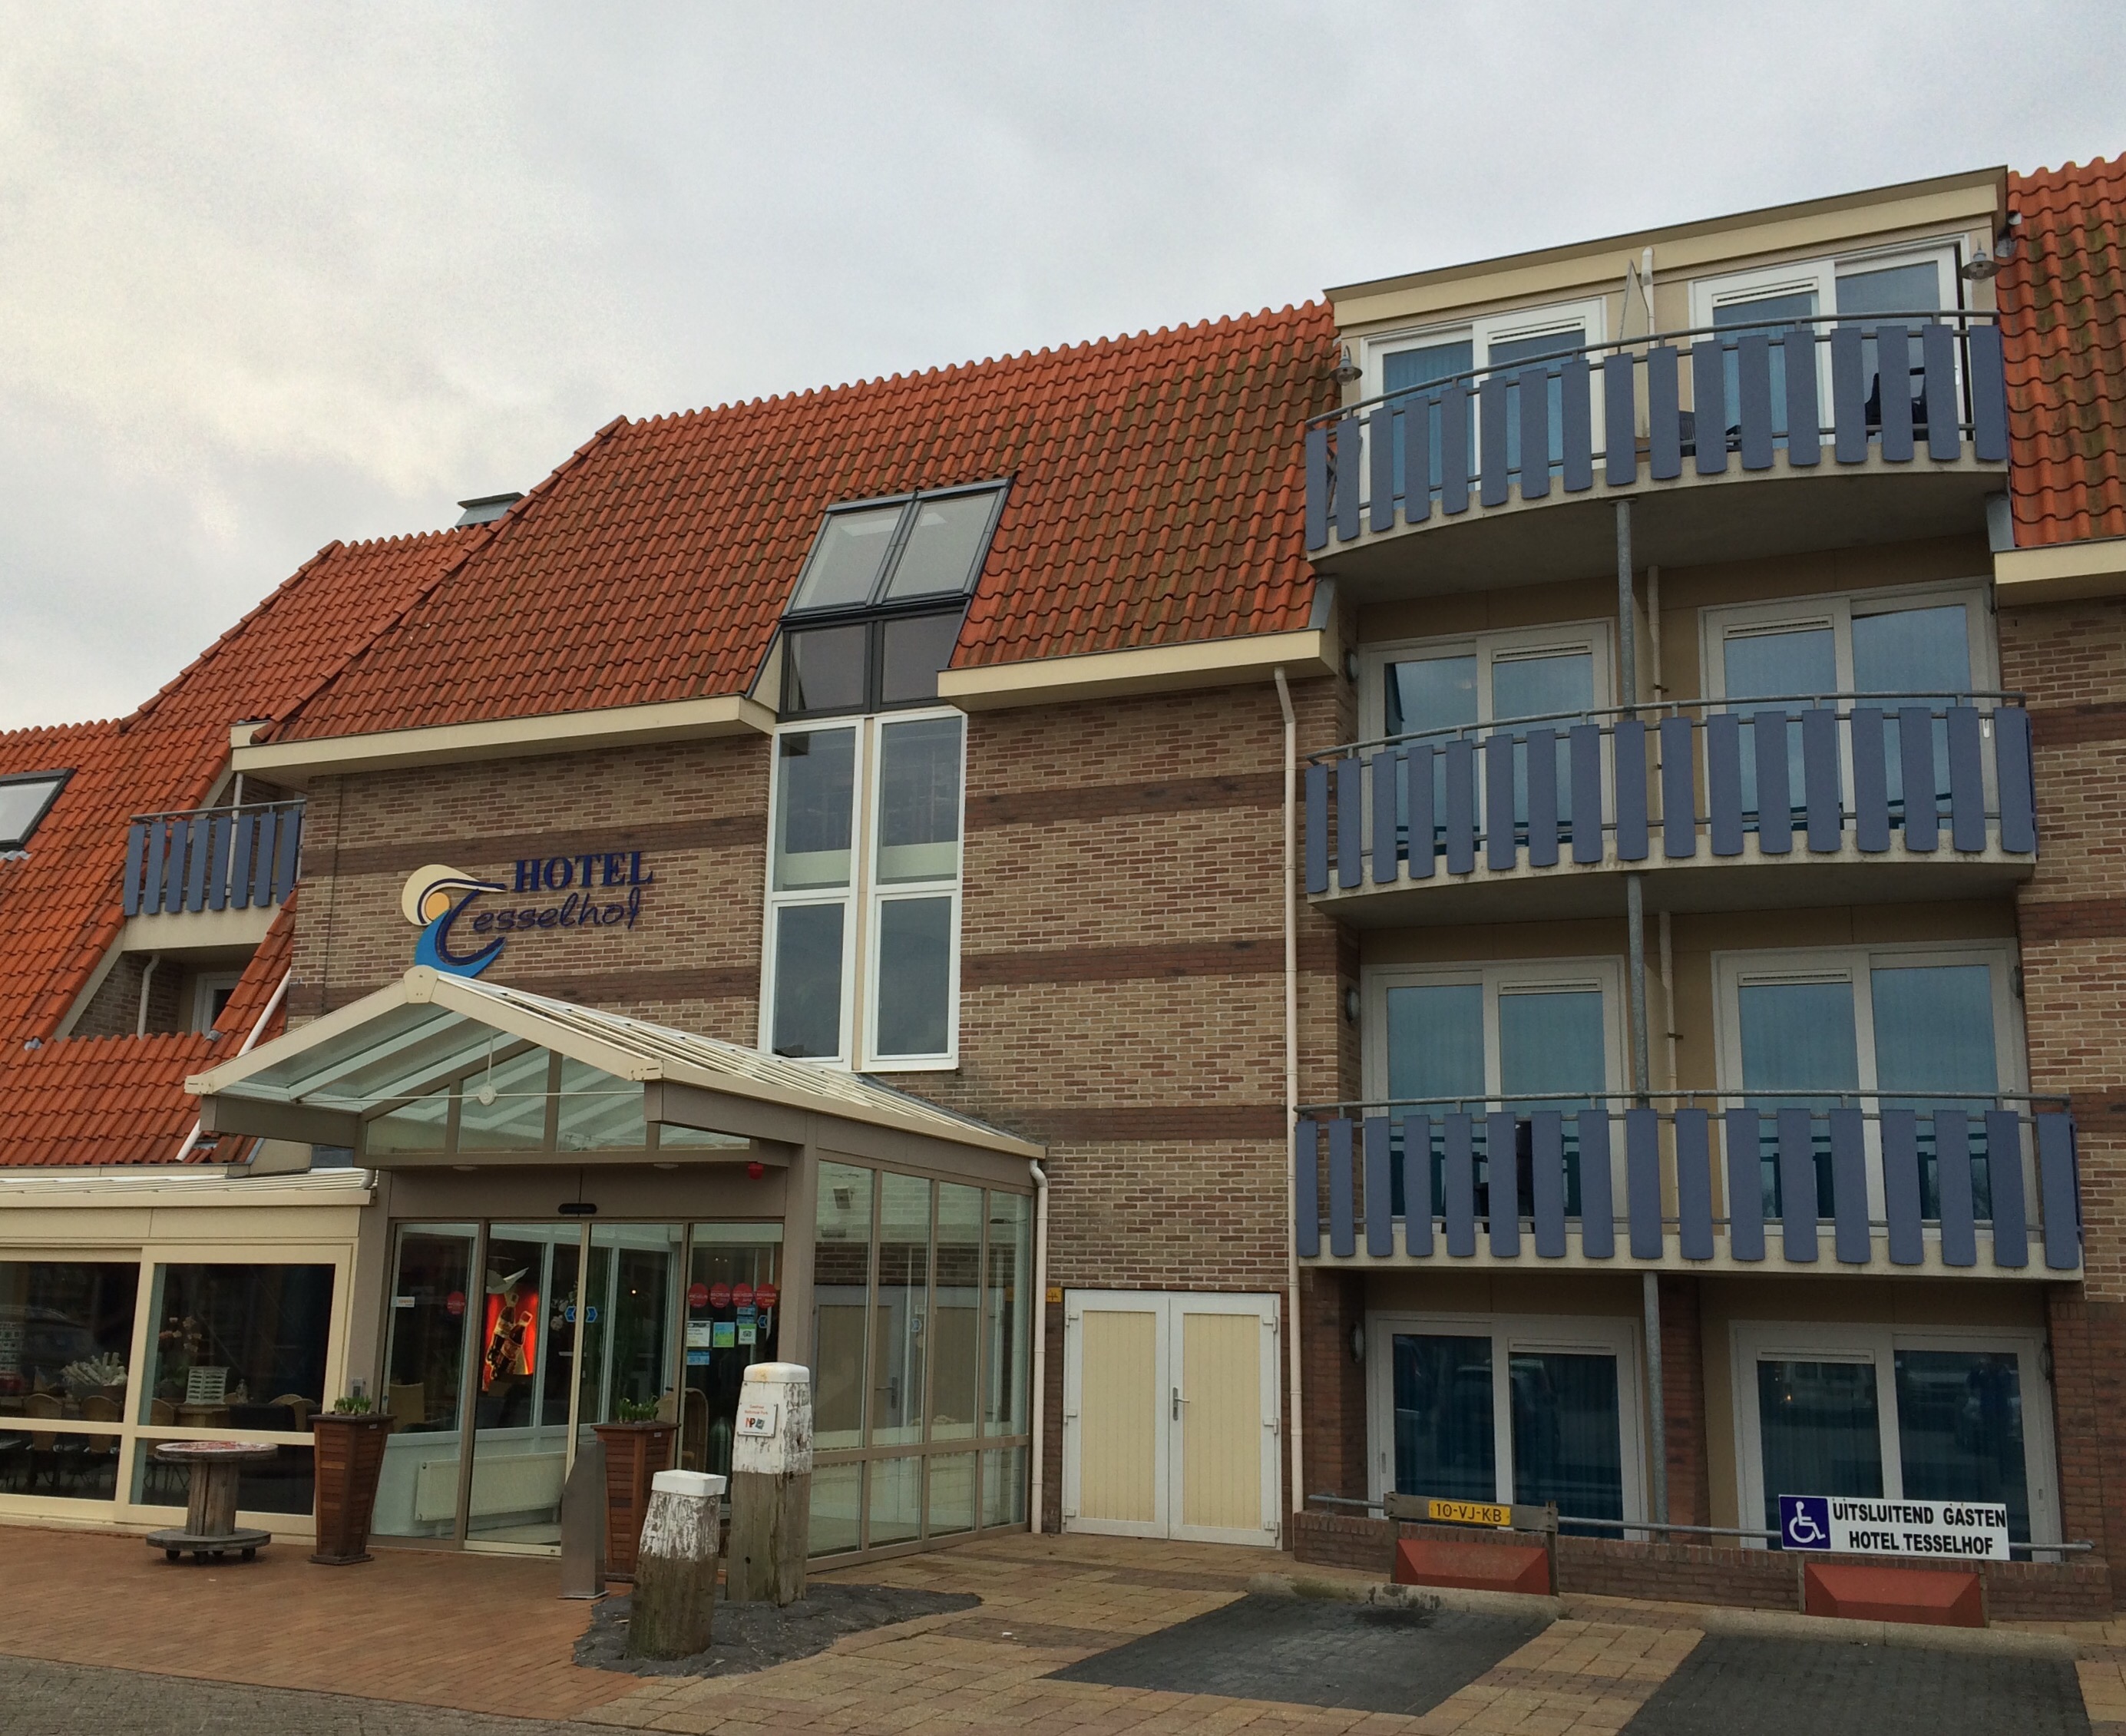 Hotel Tesselhof, Texel